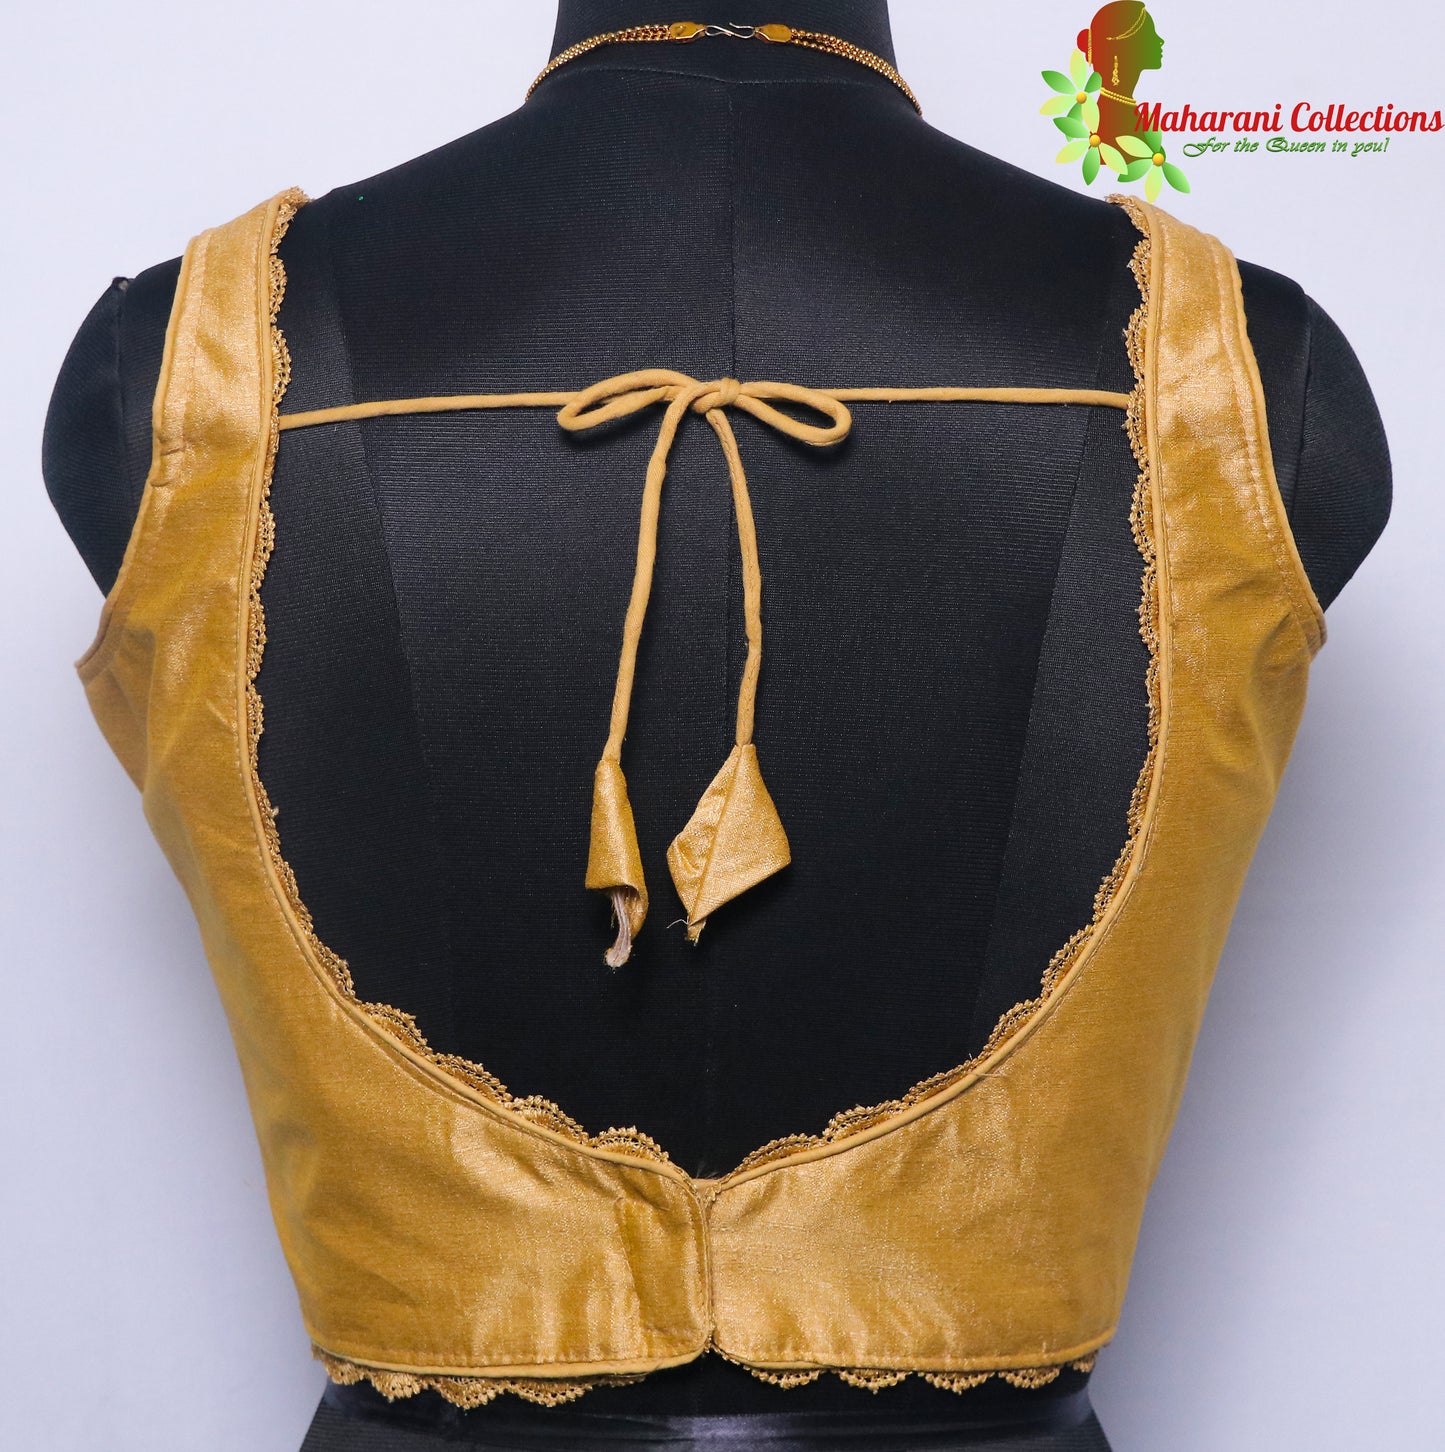 Maharani's Linen Silk Lace Blouse - Golden